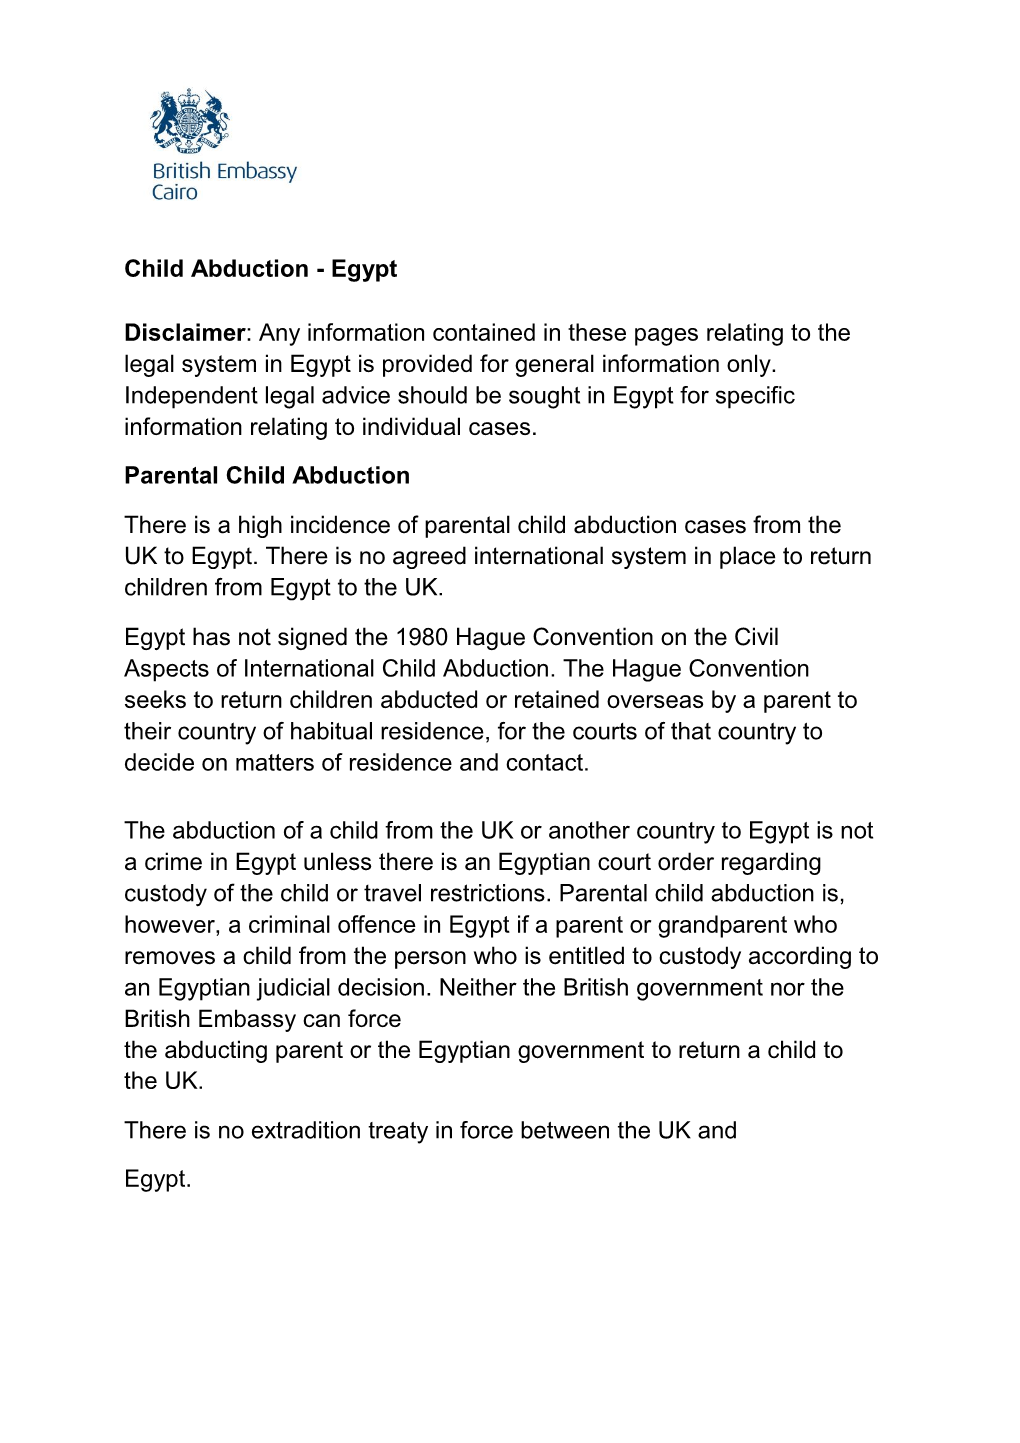 Child Abduction - Egypt